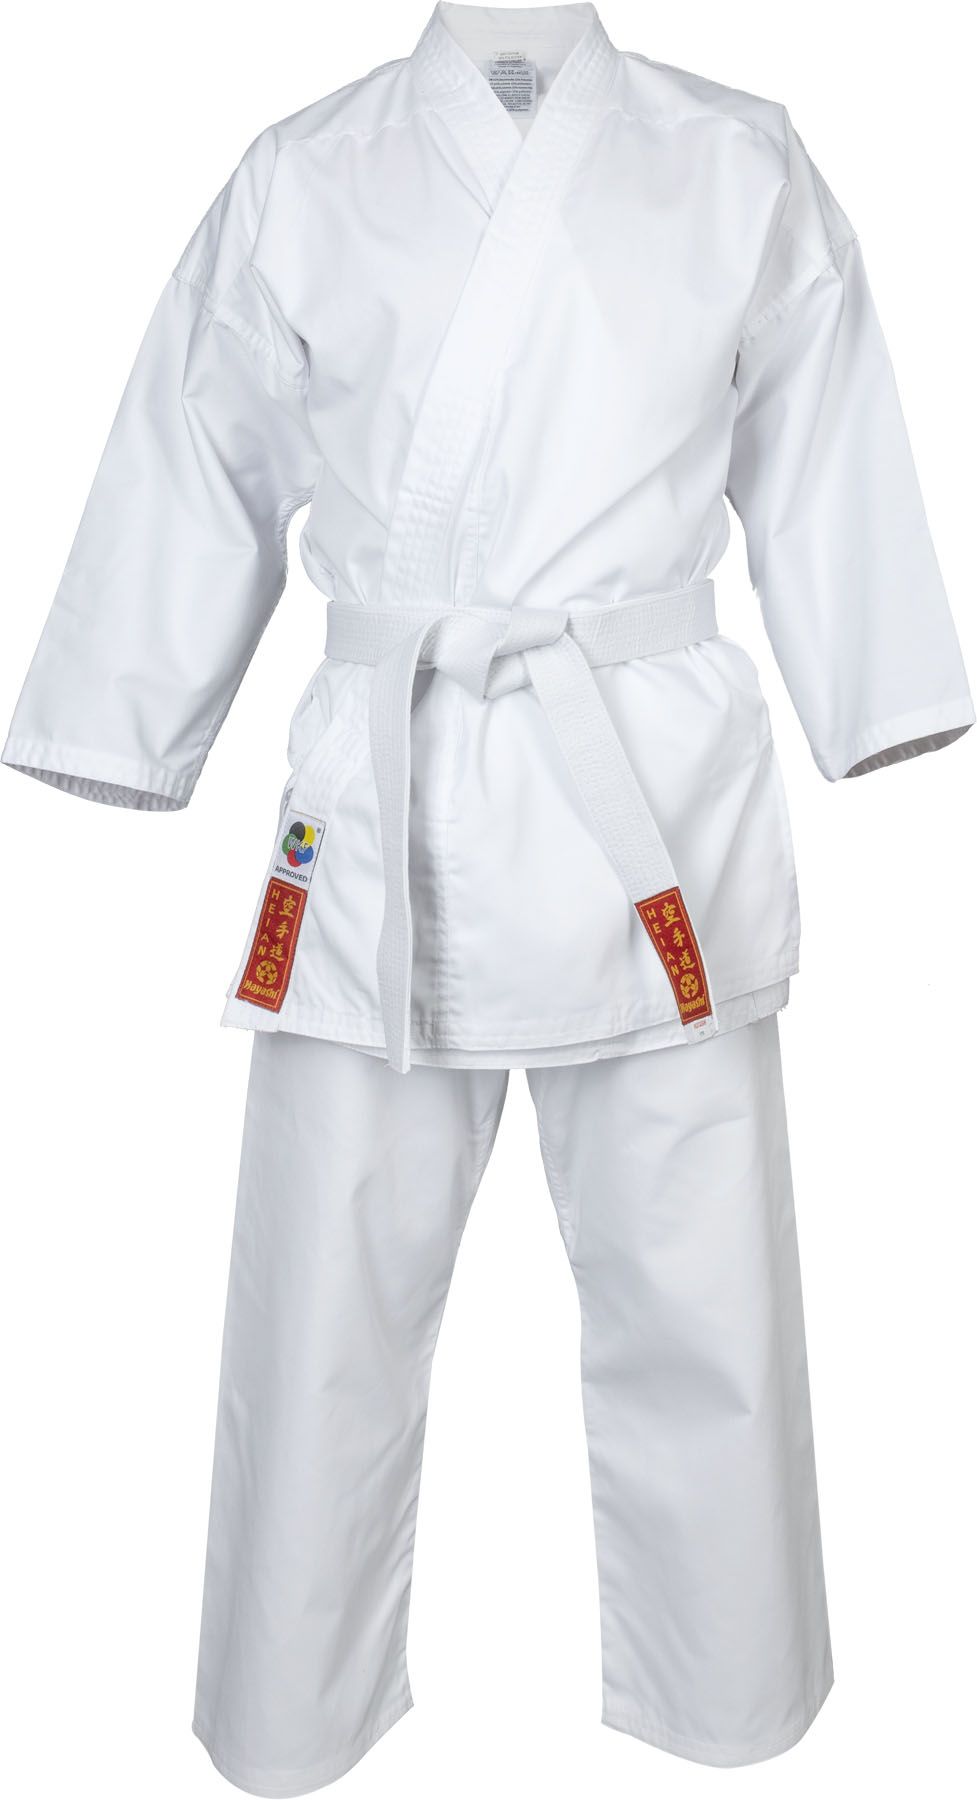 Karate Shotokan Anzug.Wettkampf u Training,10Oz Takachi Karateanzug 120-200cm 